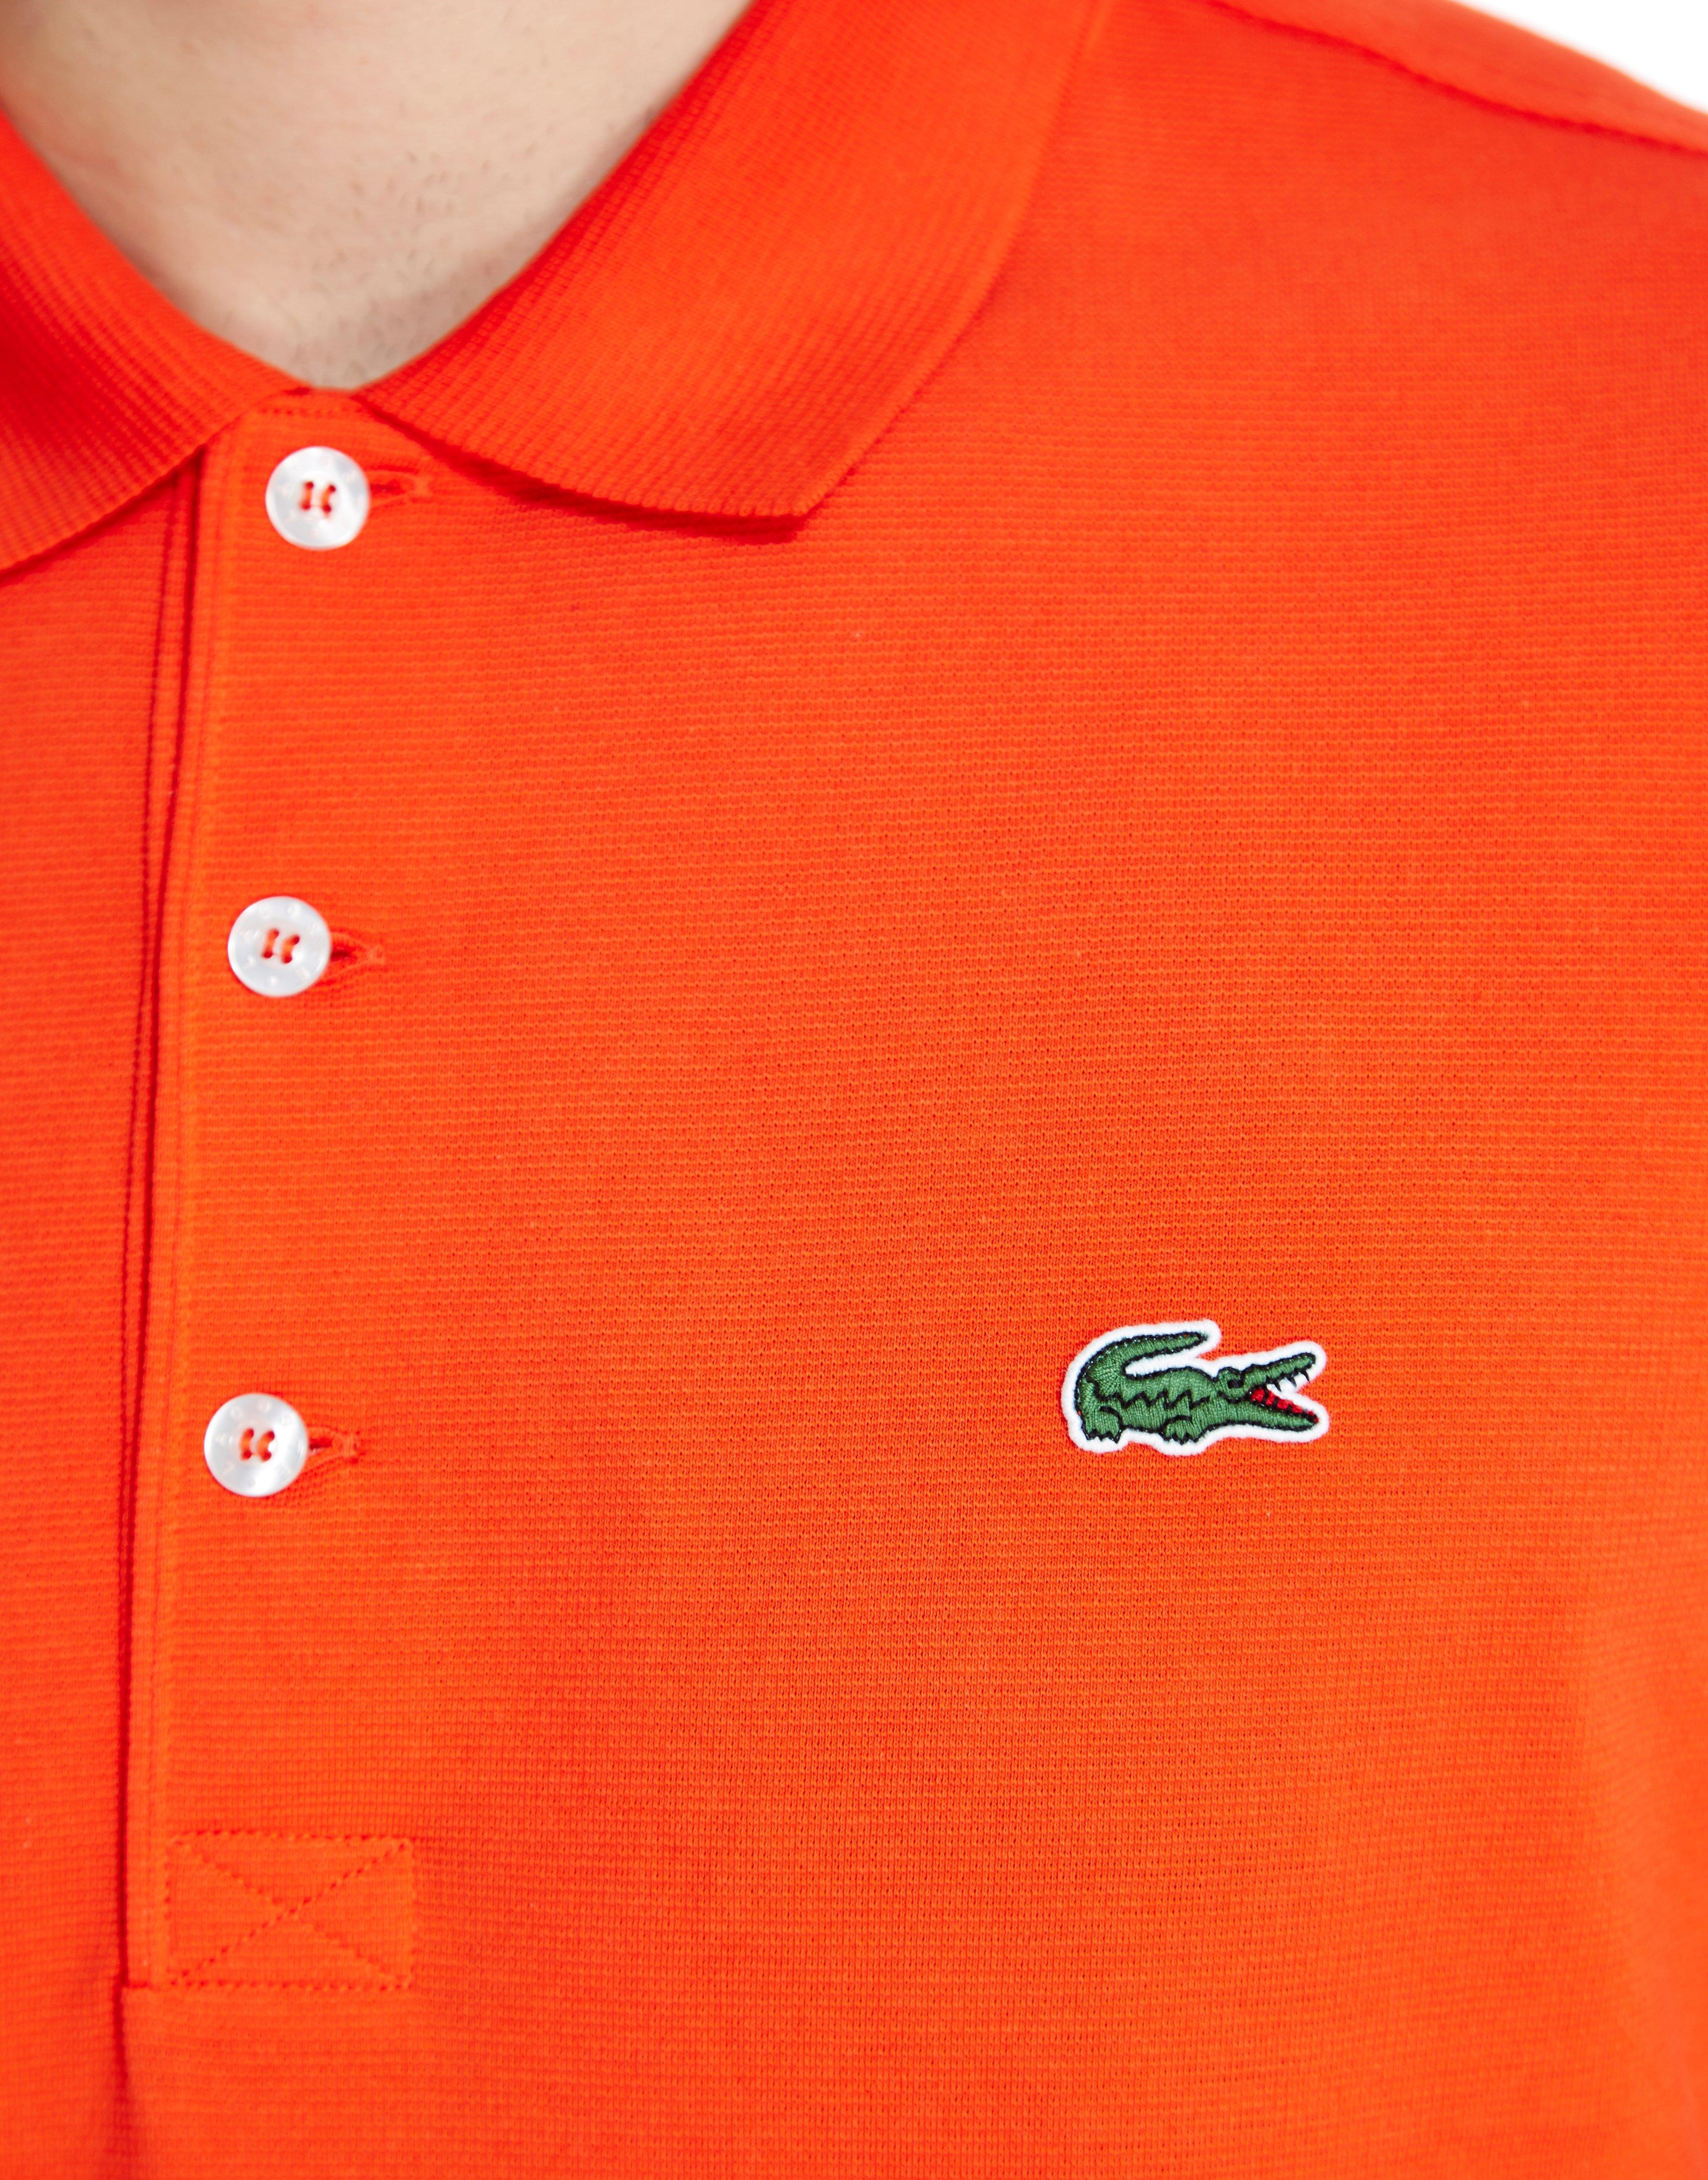 izod polo shirts with alligator